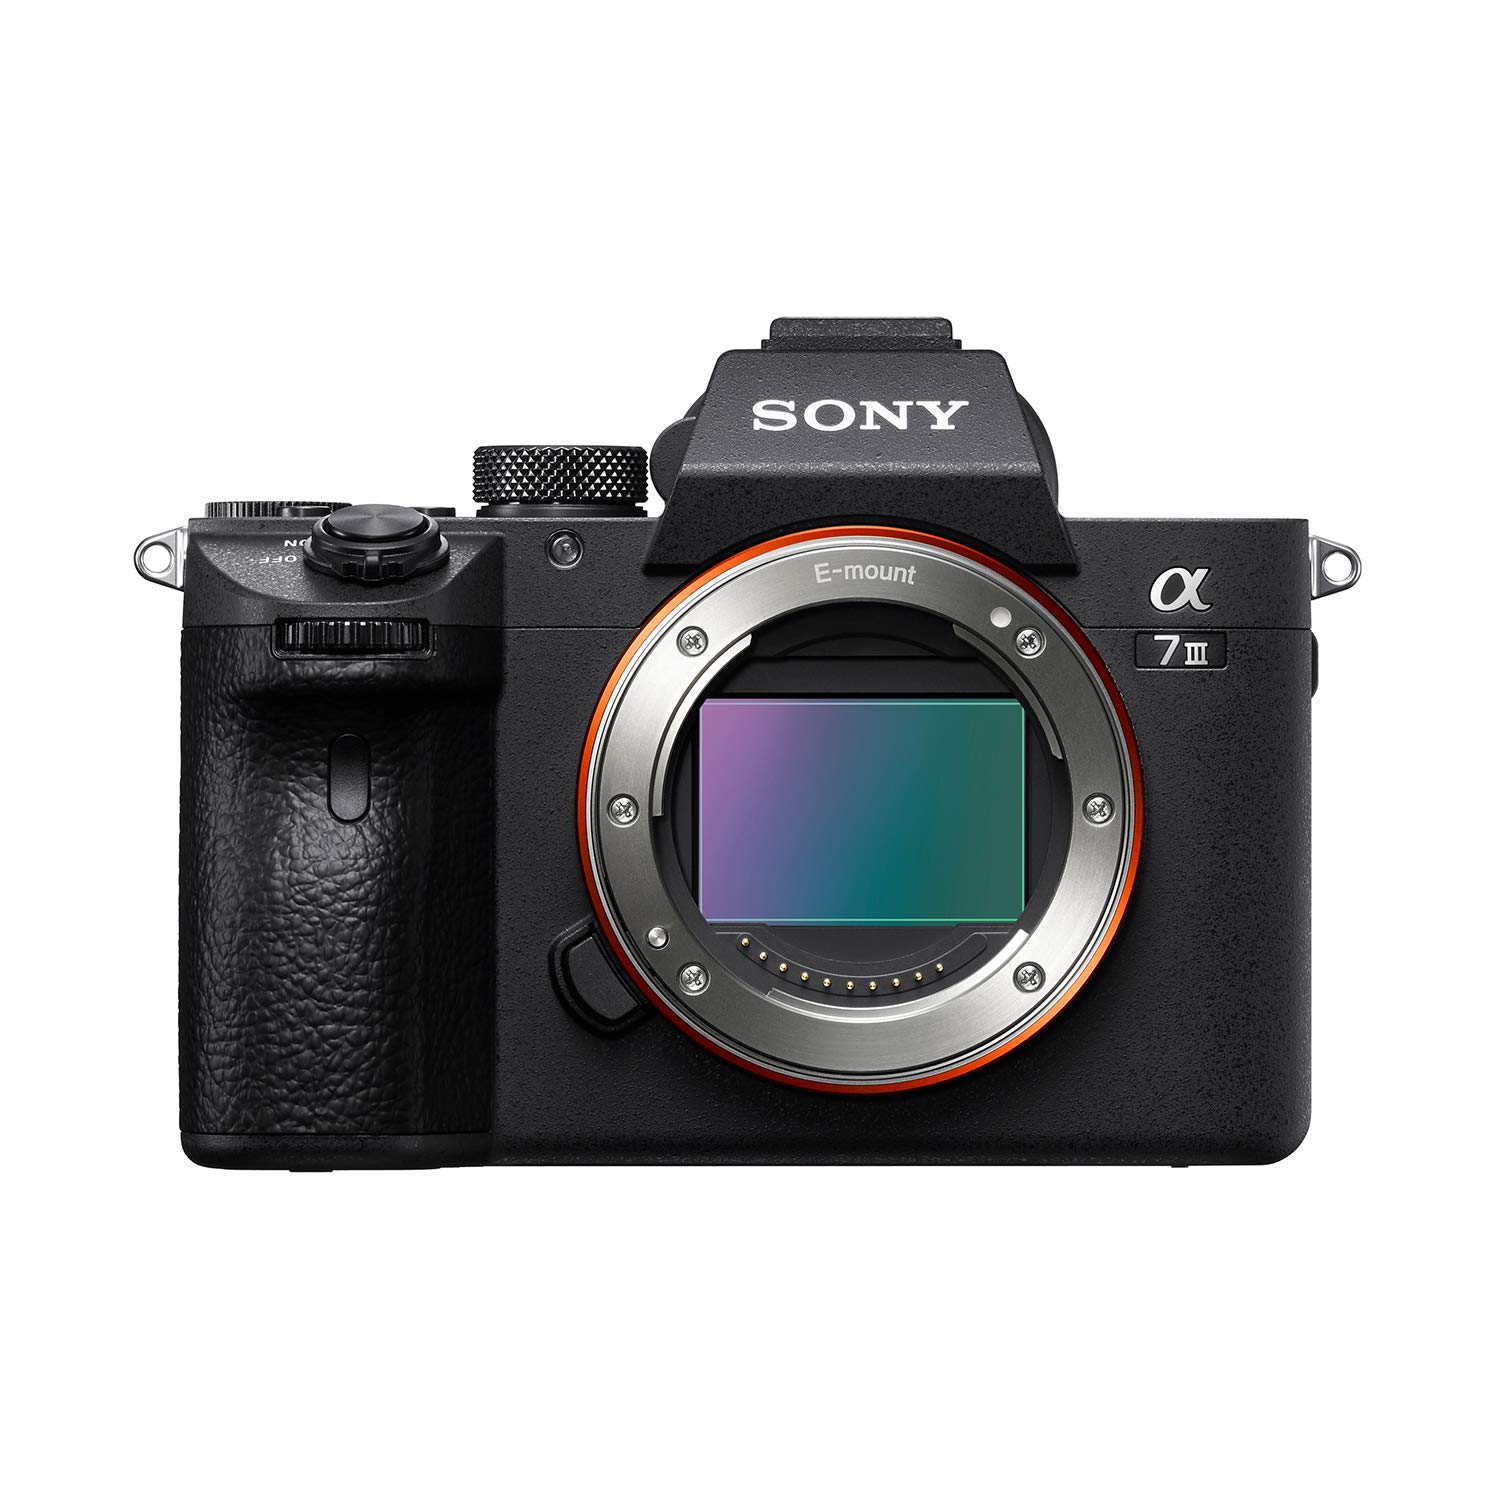 Sony Alpha ILCE-7M3 Full-Frame 24.2MP Mirrorless Digital SLR Camera